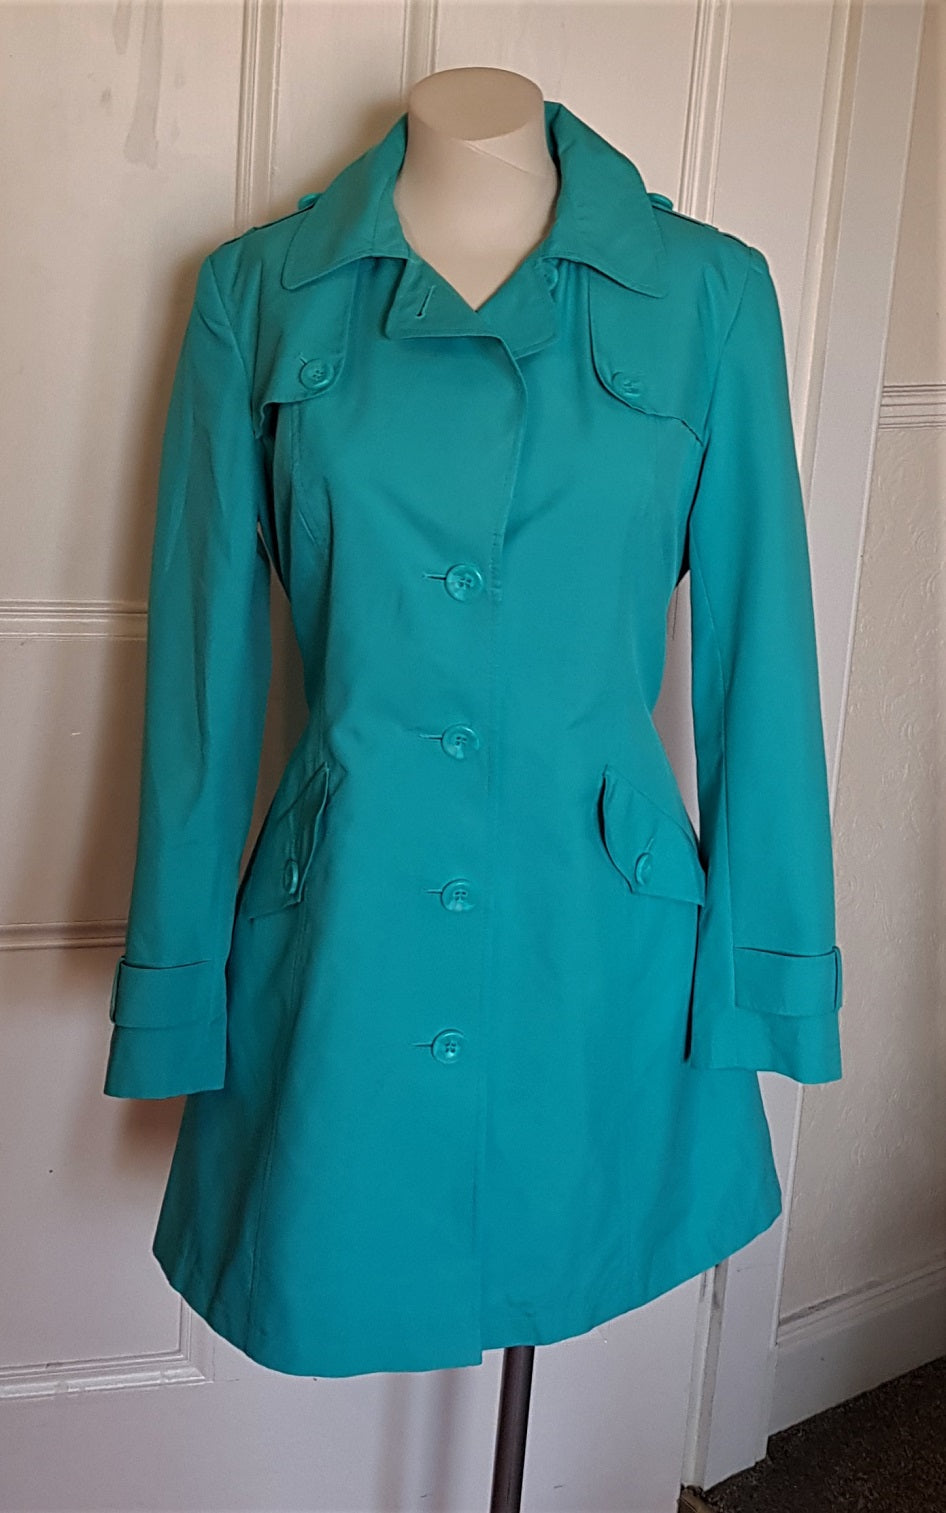 M&S turquoise raincoat – The Frockery